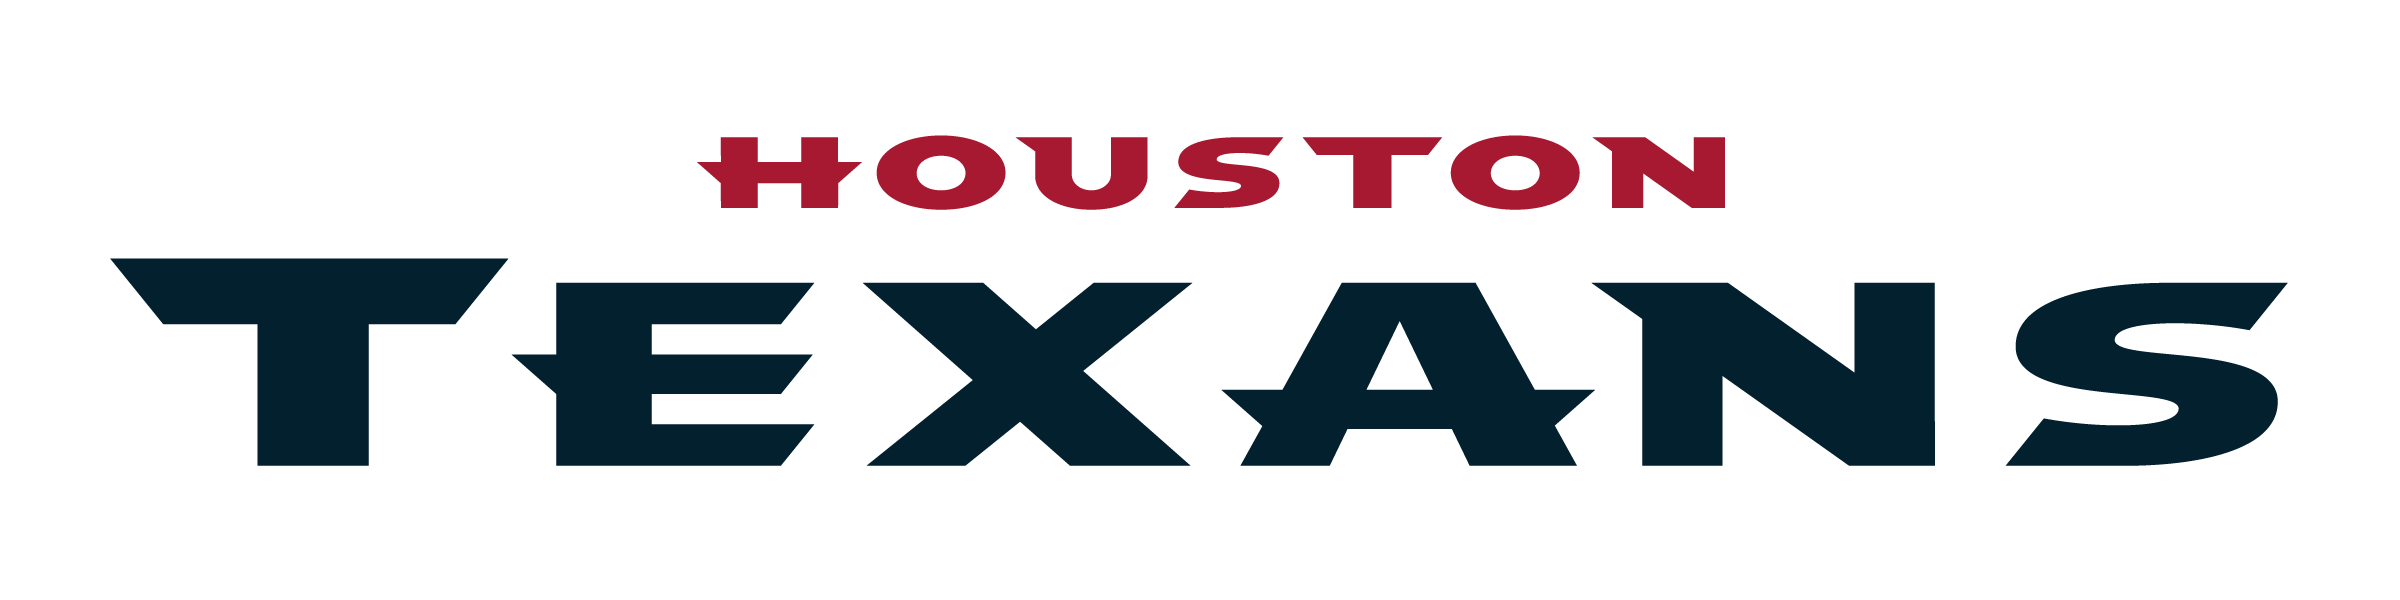 Houston Texans Logo - Houston Texans Logo PNG Transparent & SVG Vector